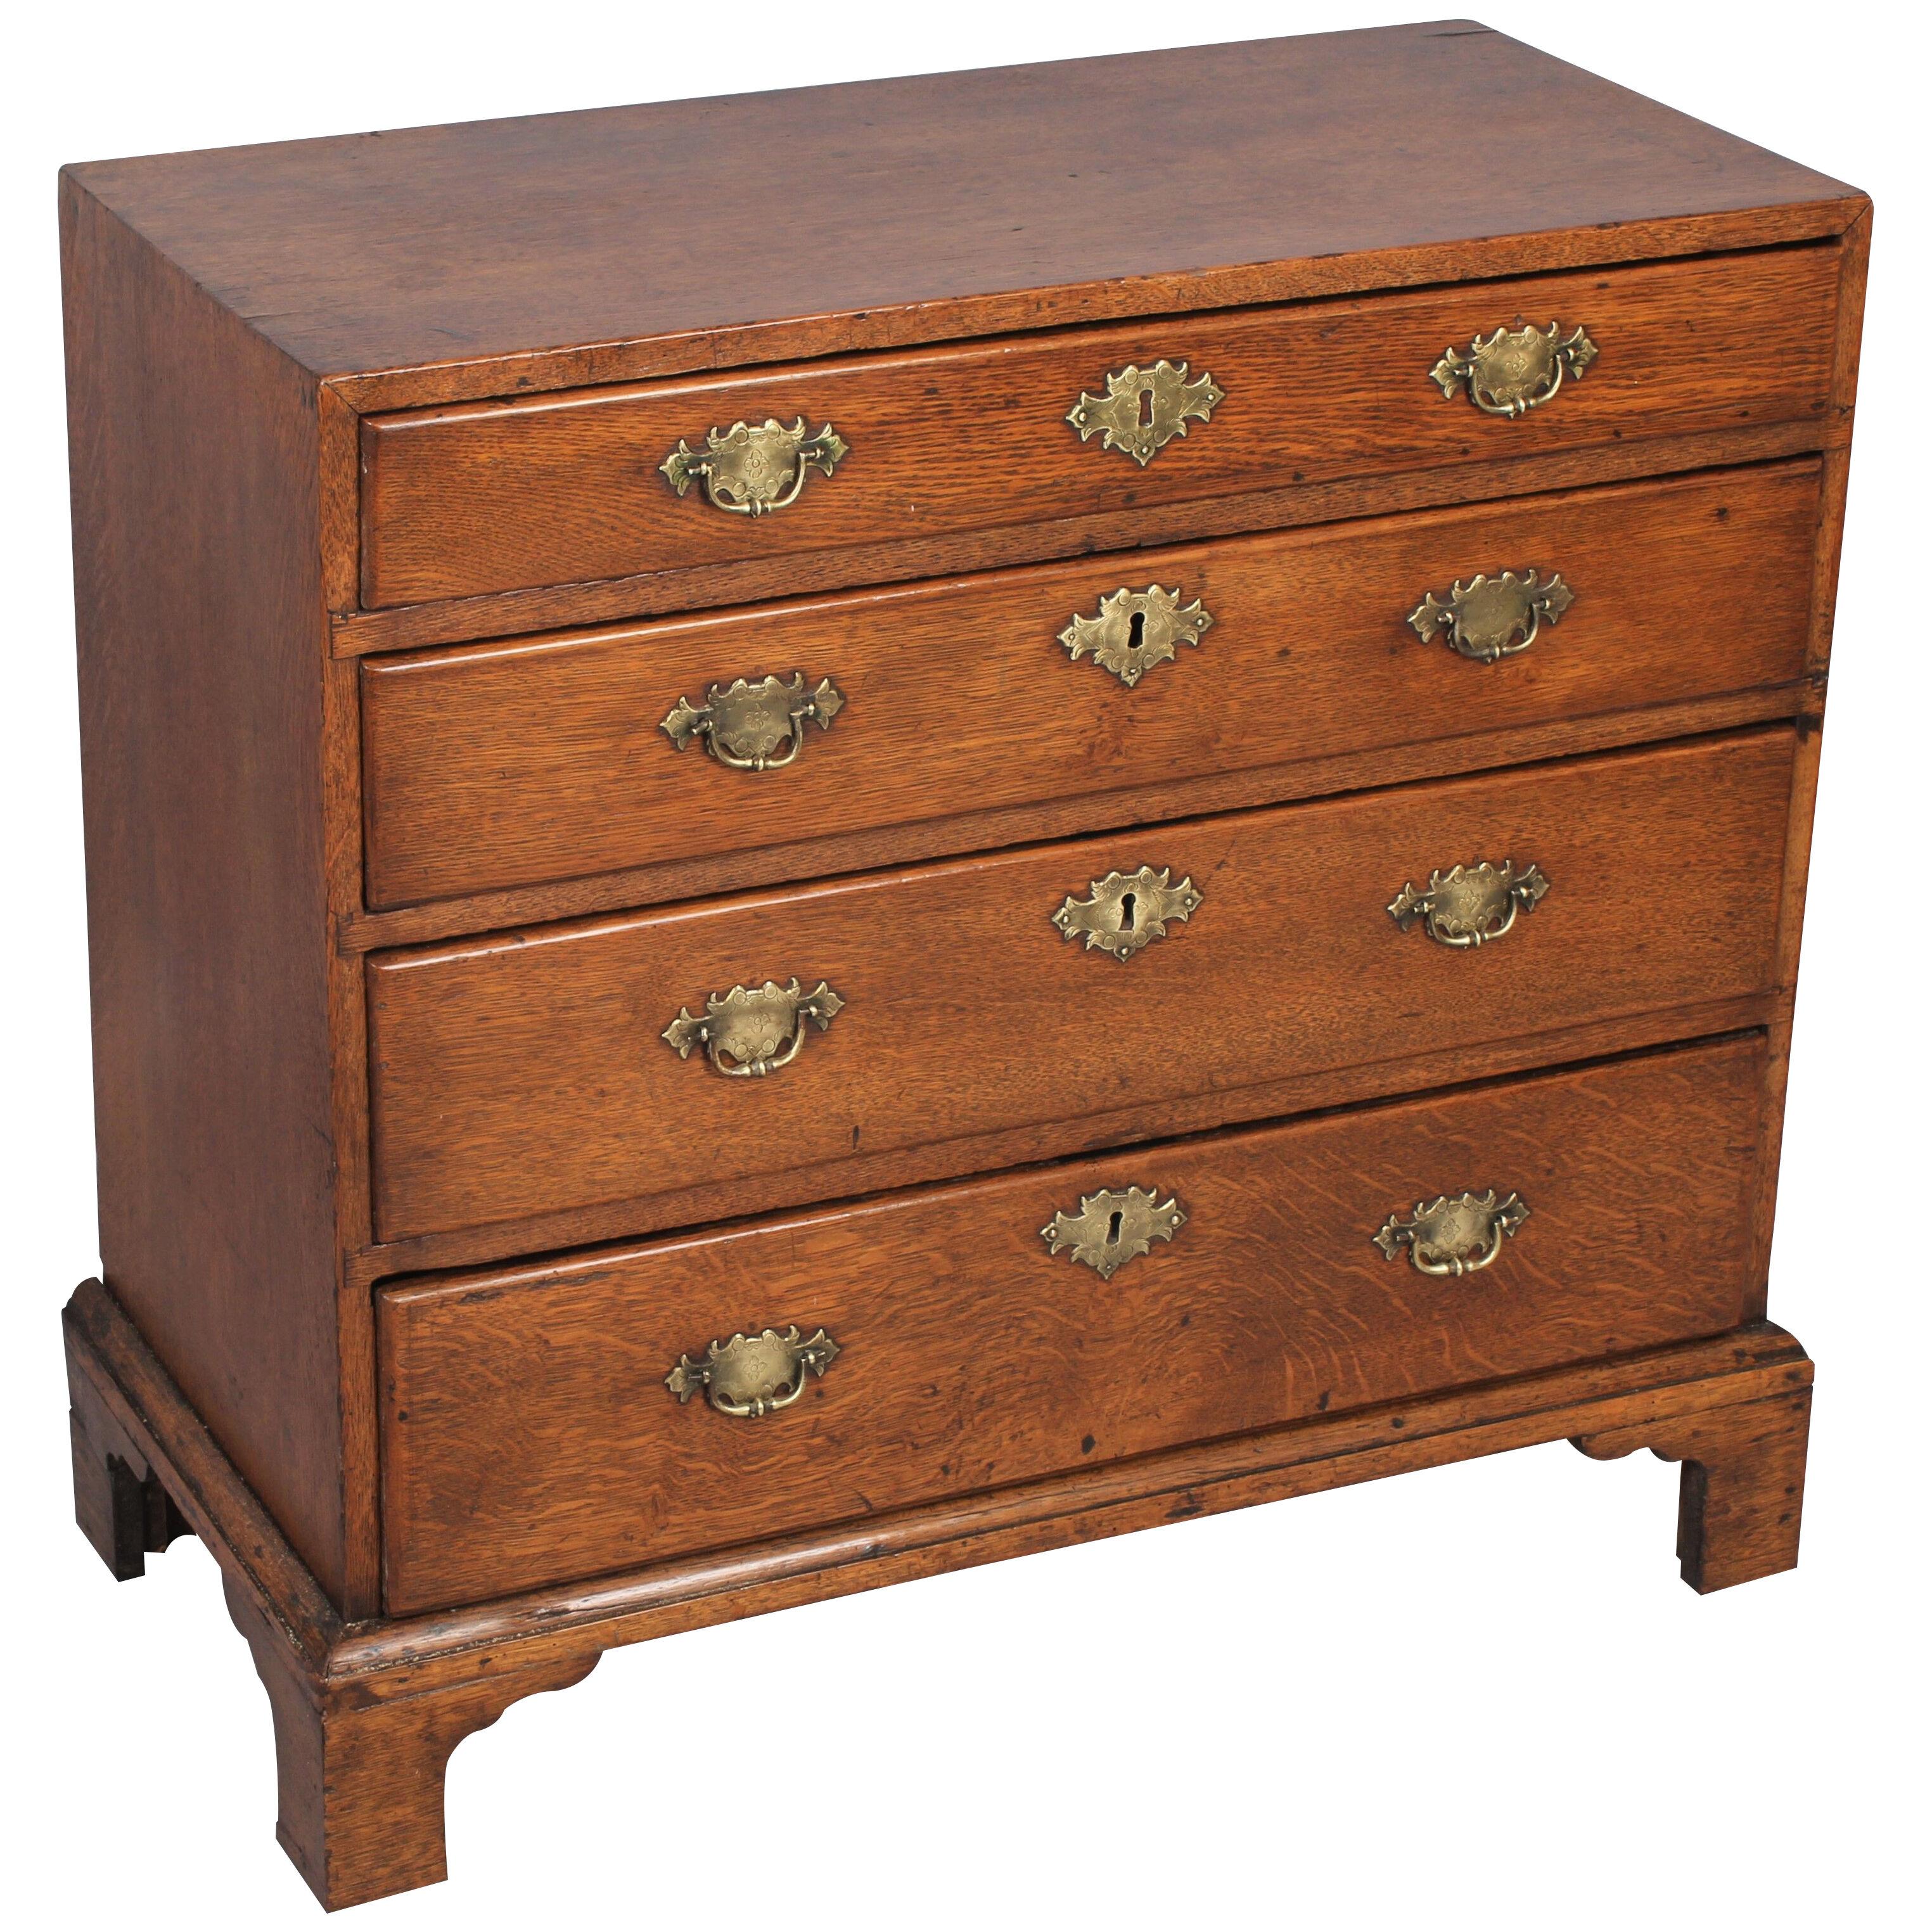 A rare George II period oak chest of drawers of diminutive size